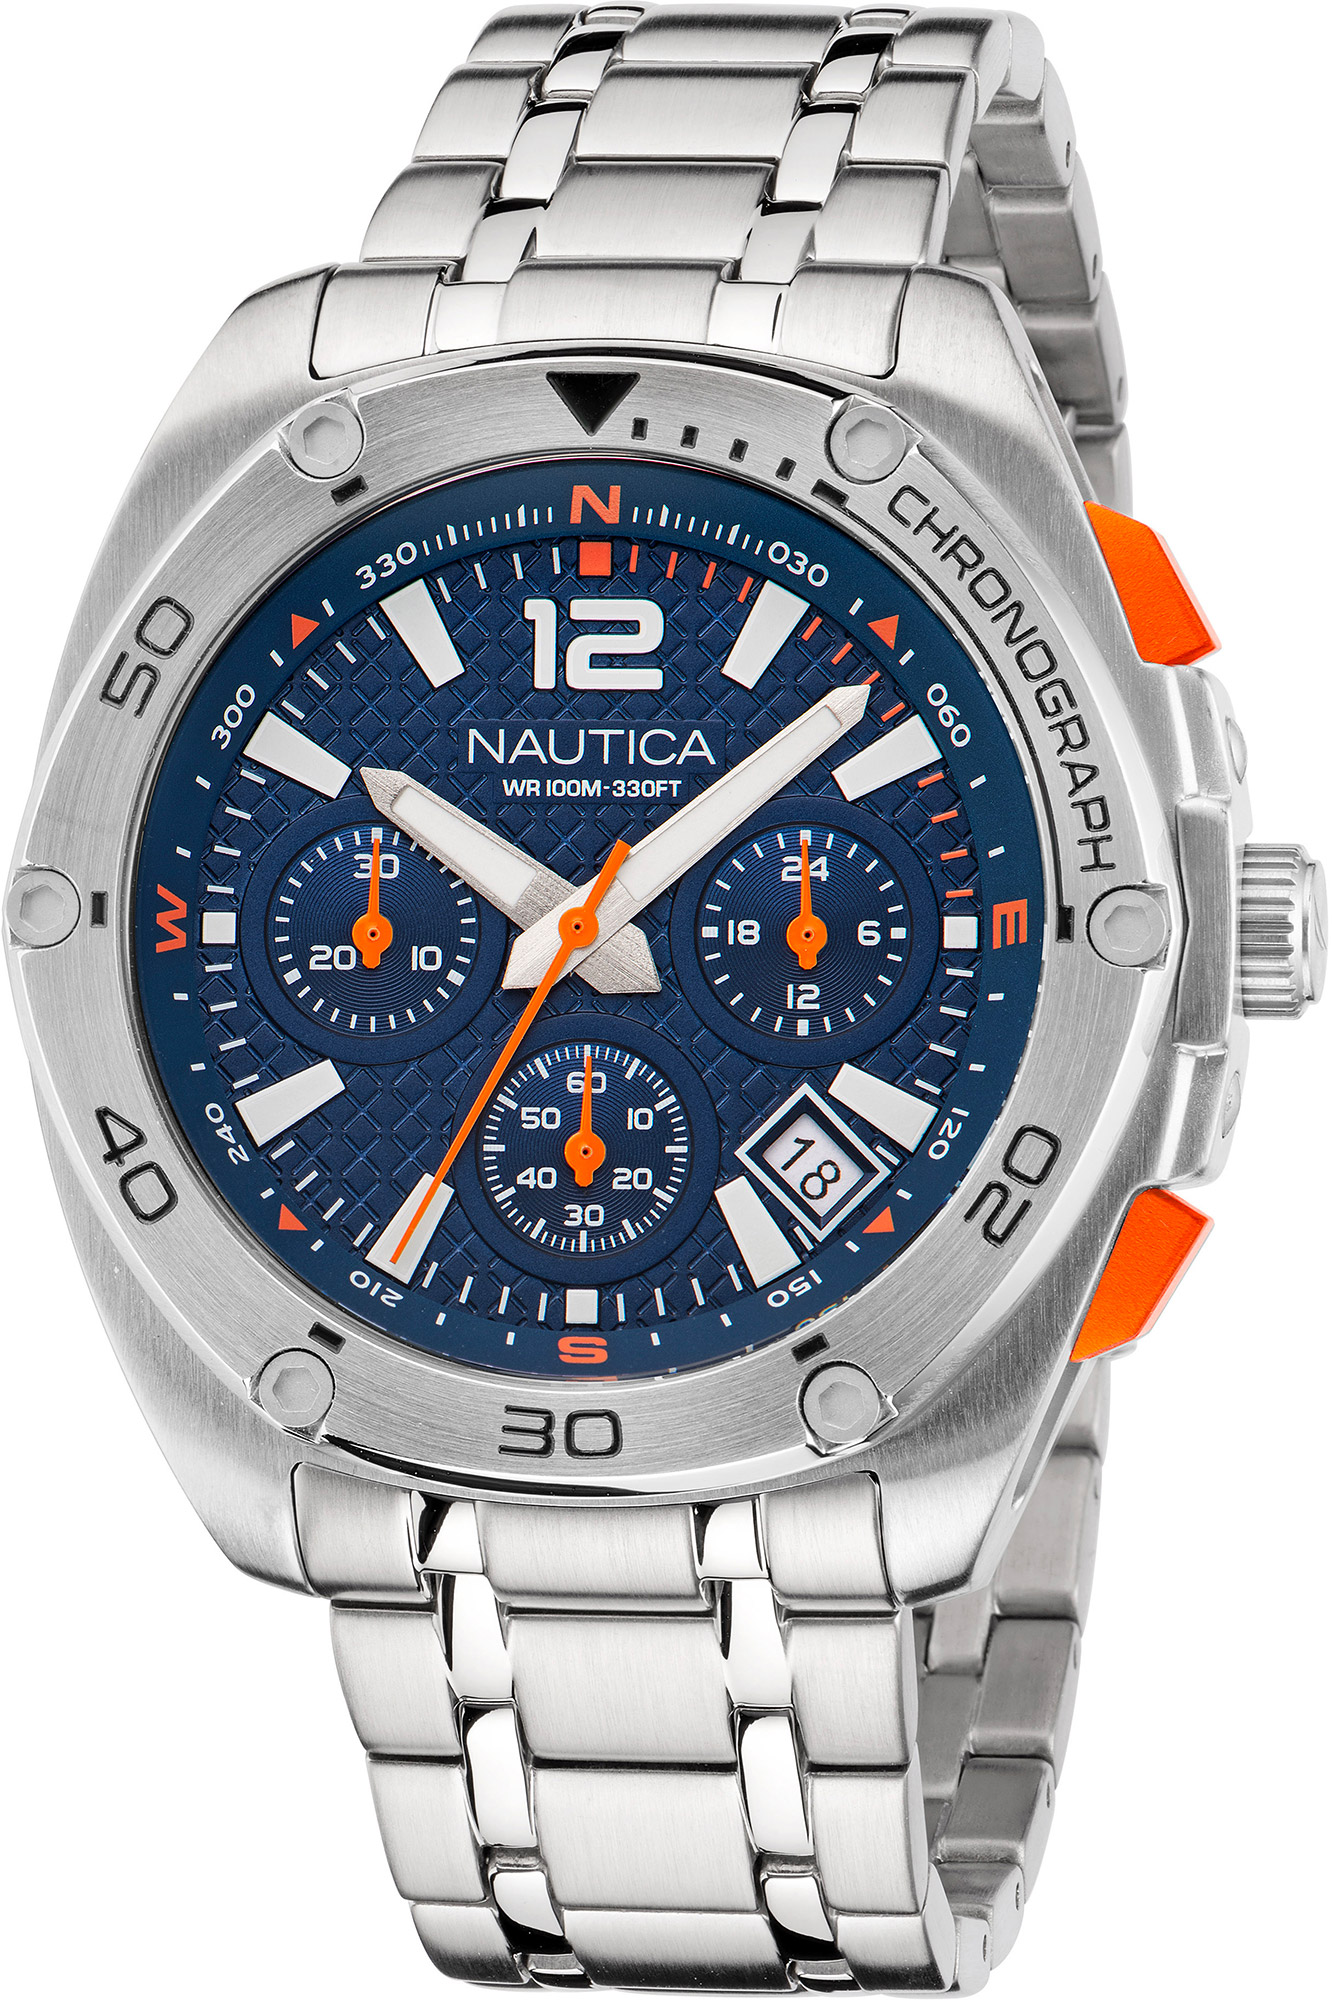 Reloj Nautica naptcf212